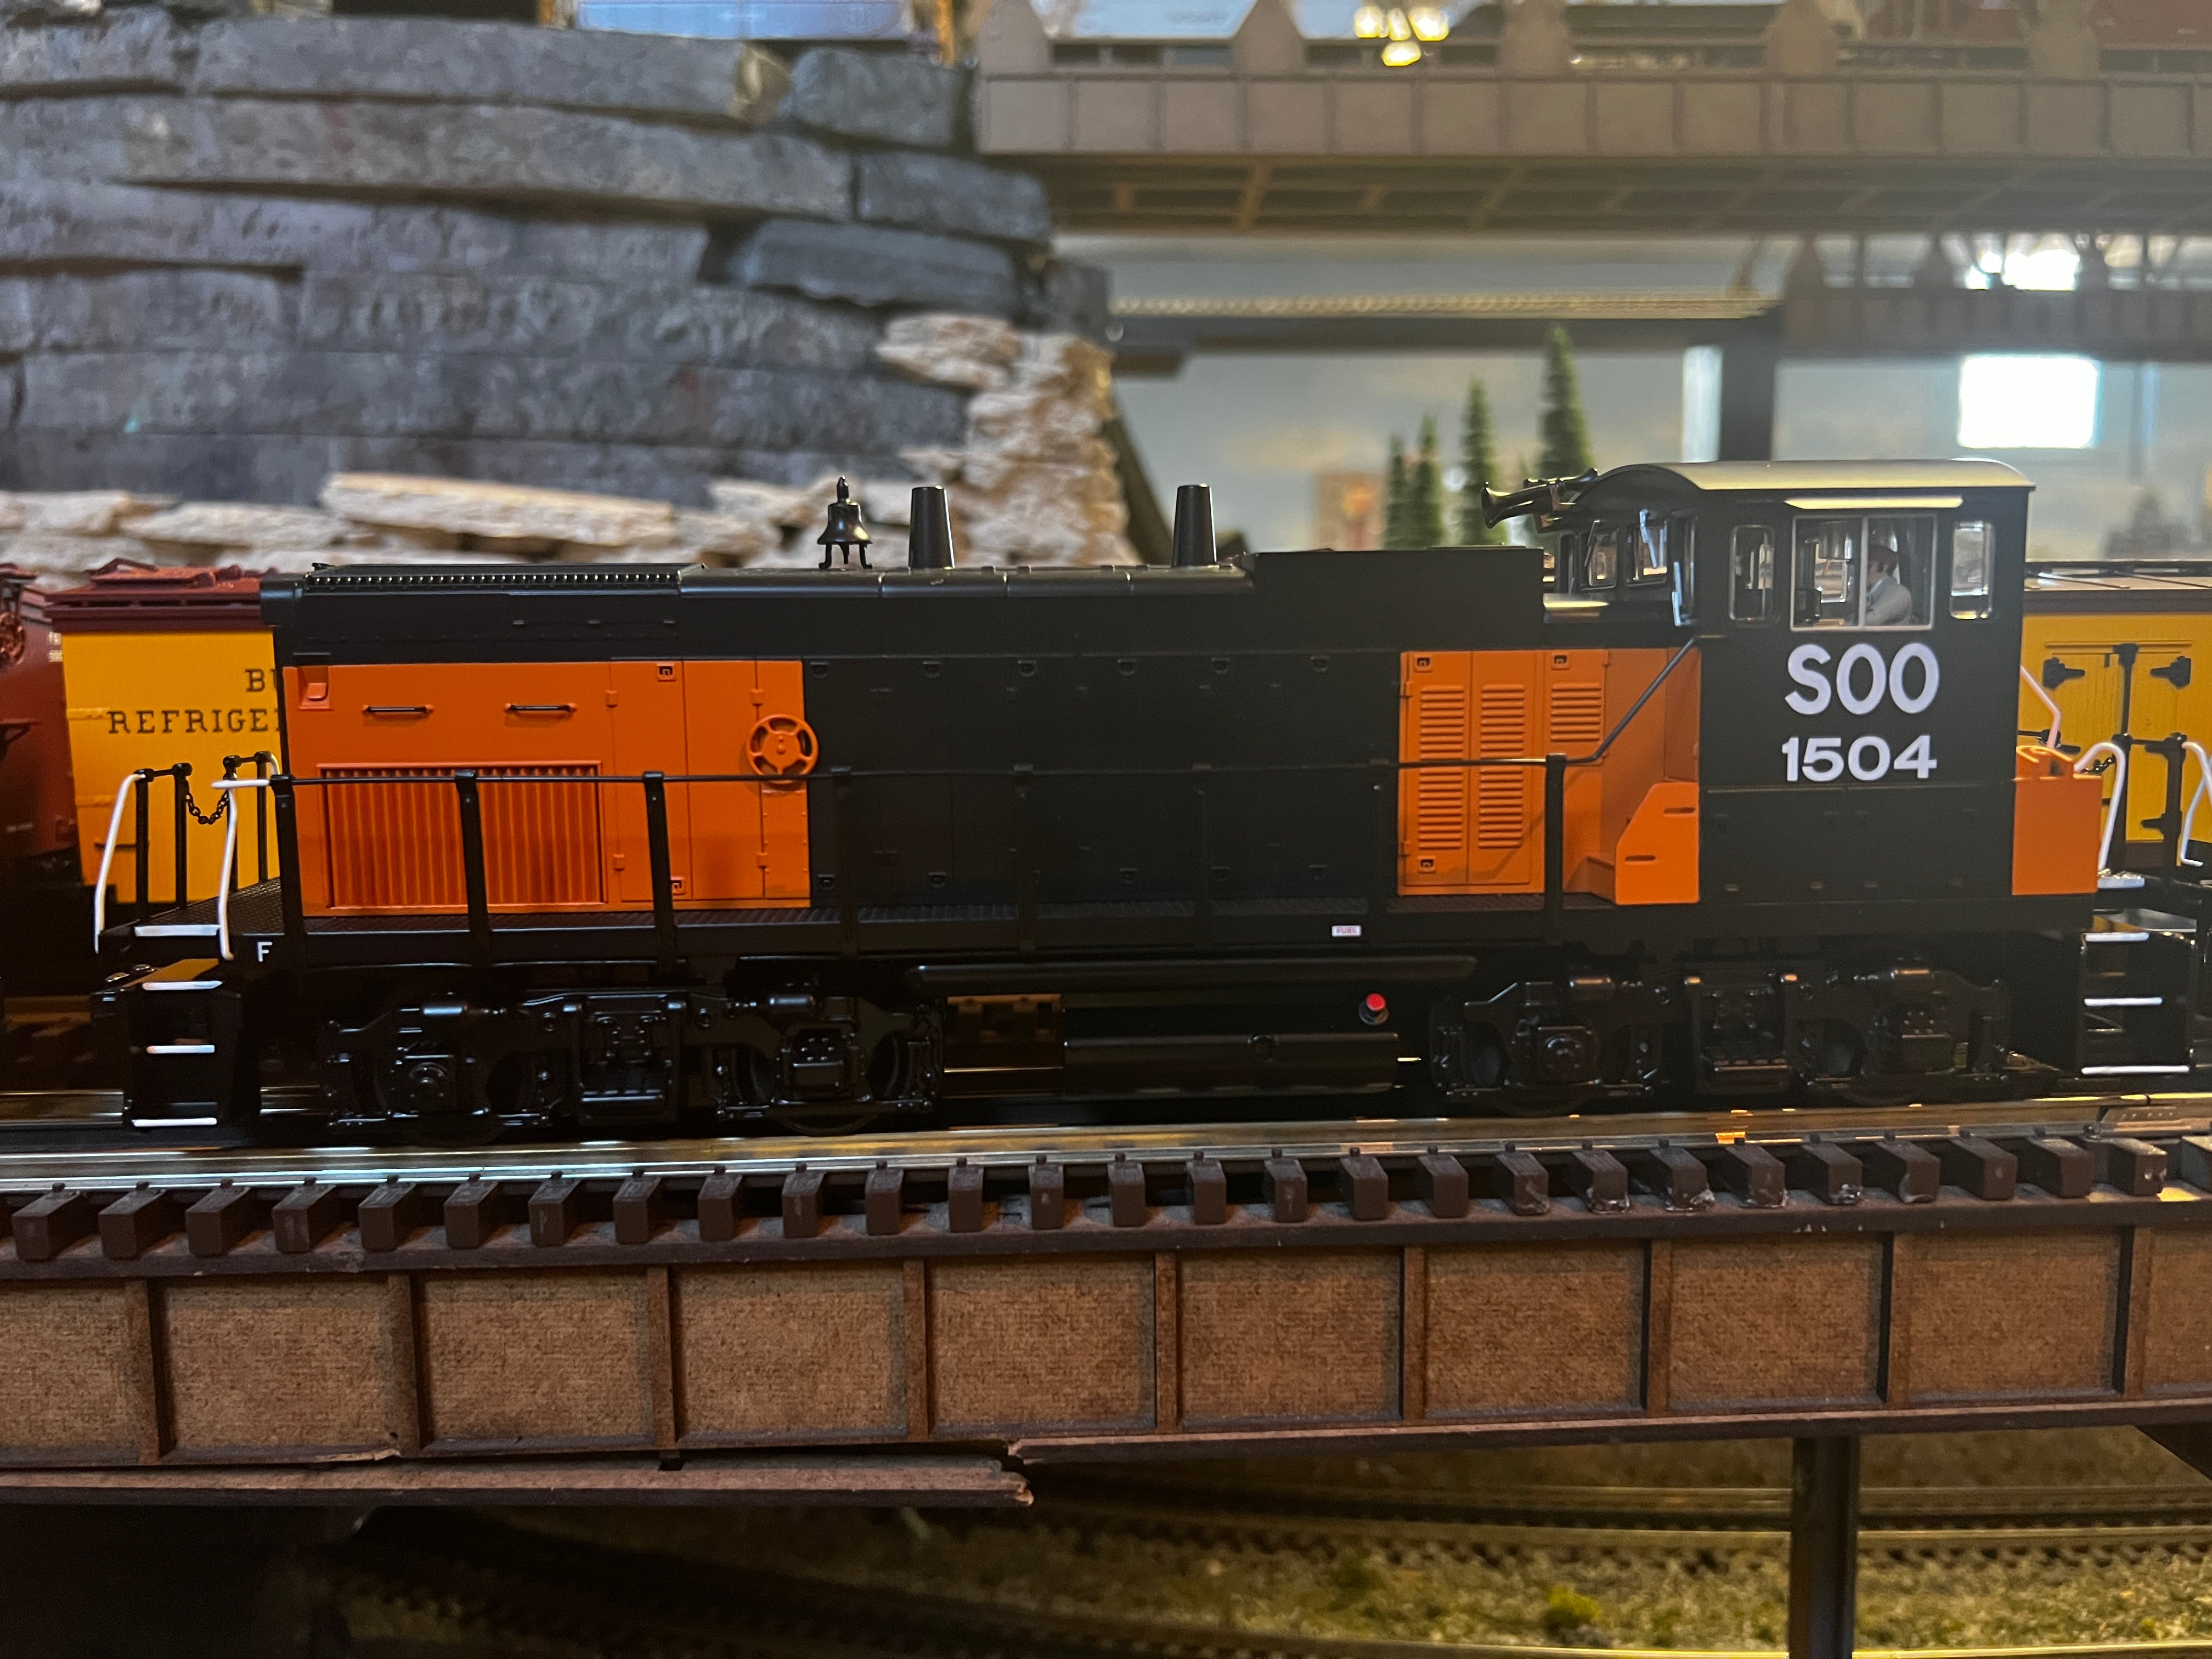 MTH 30-20968-1 - MP15 Diesel Engine "SOO Line" (Milwaukee Repaint) #1504 w/ PS3 - Custom Run for MrMuffin'sTrains